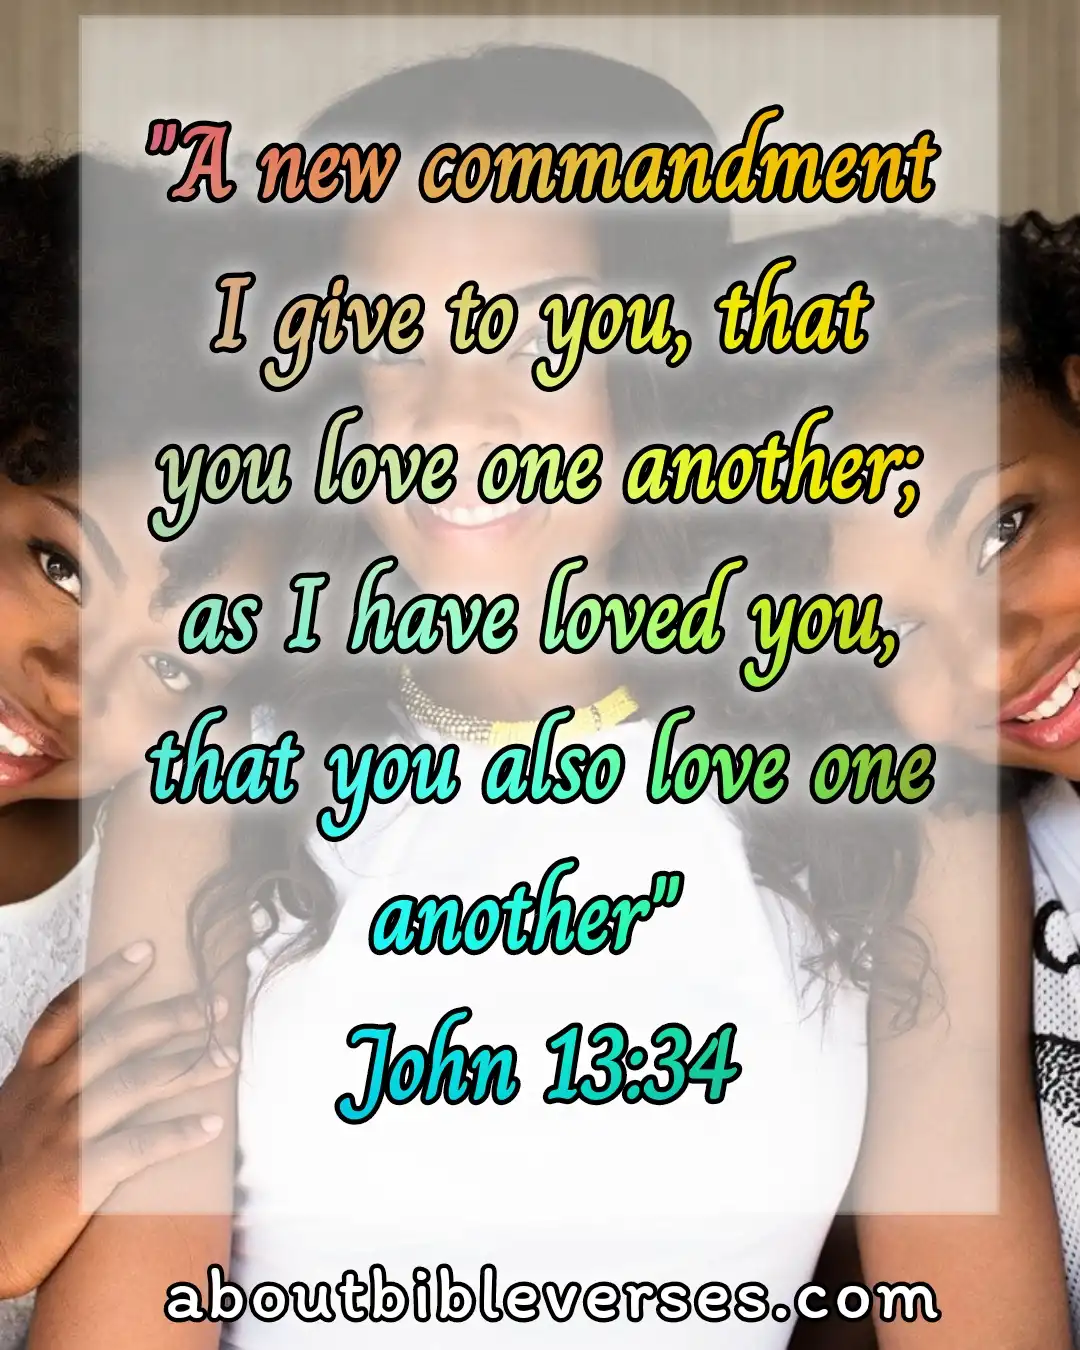 bible verses loving your neighbor (John 13:34)